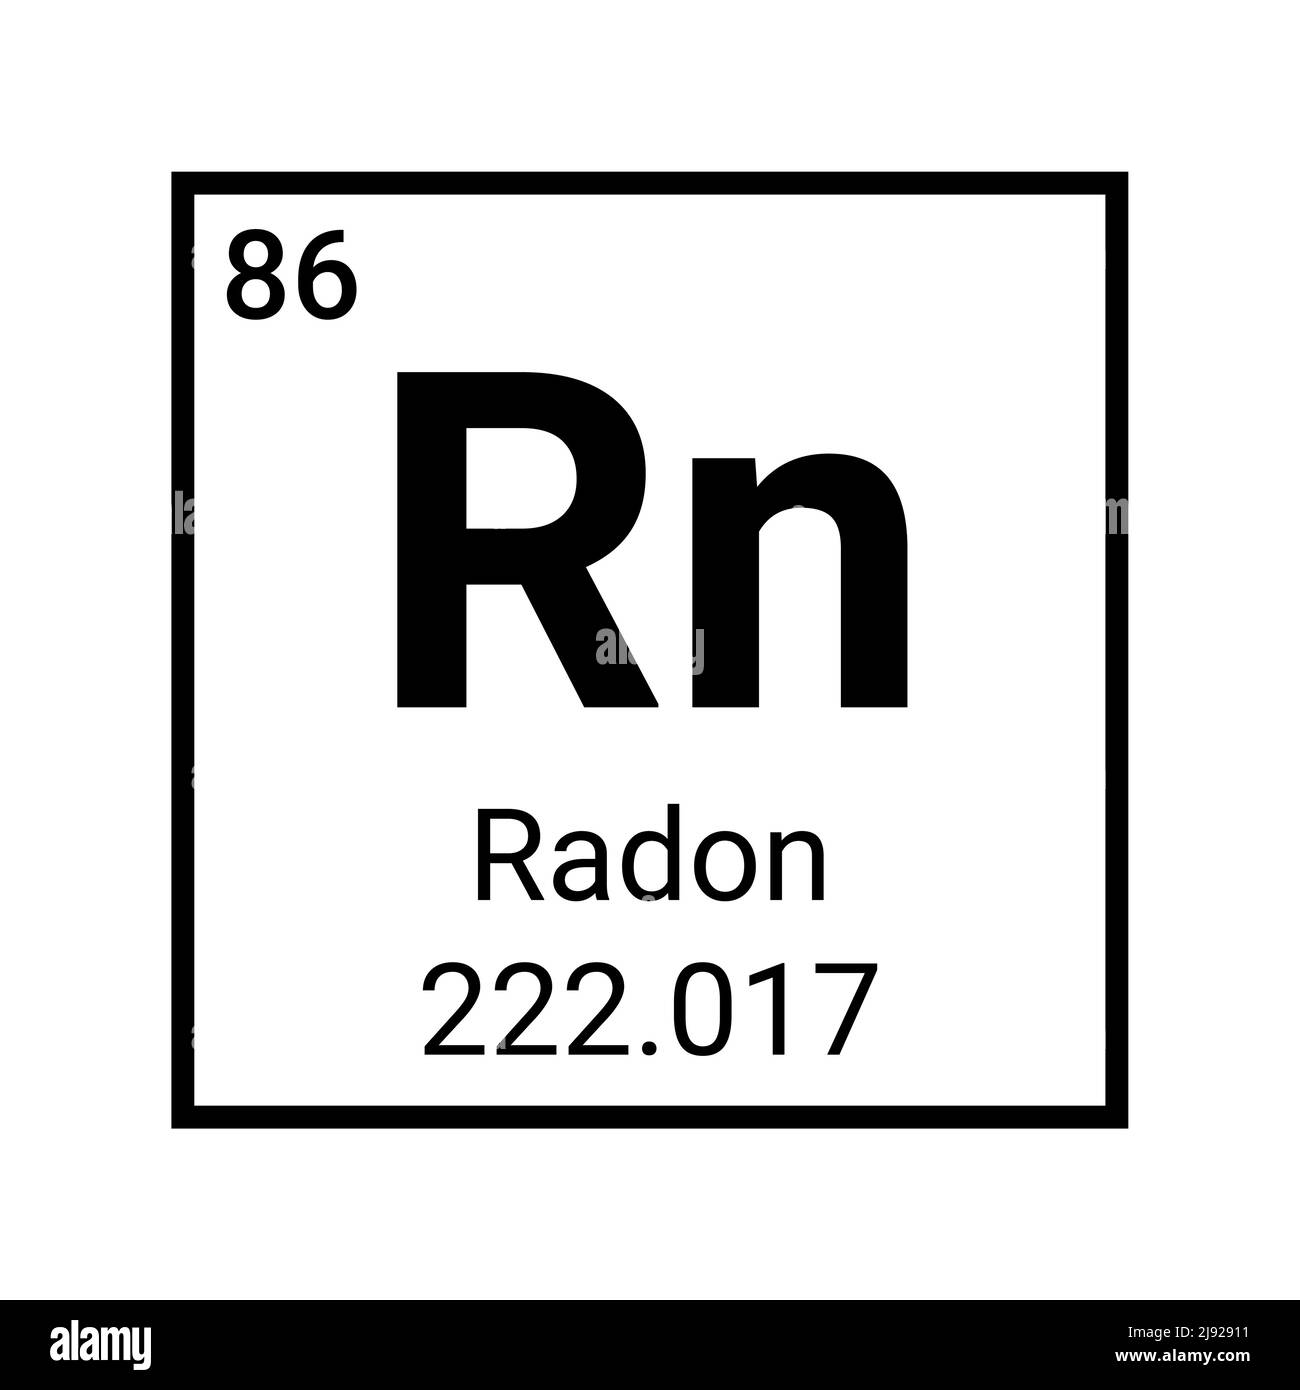 Radon element periodic table symbol. Gas radon chemistry element Stock Vector